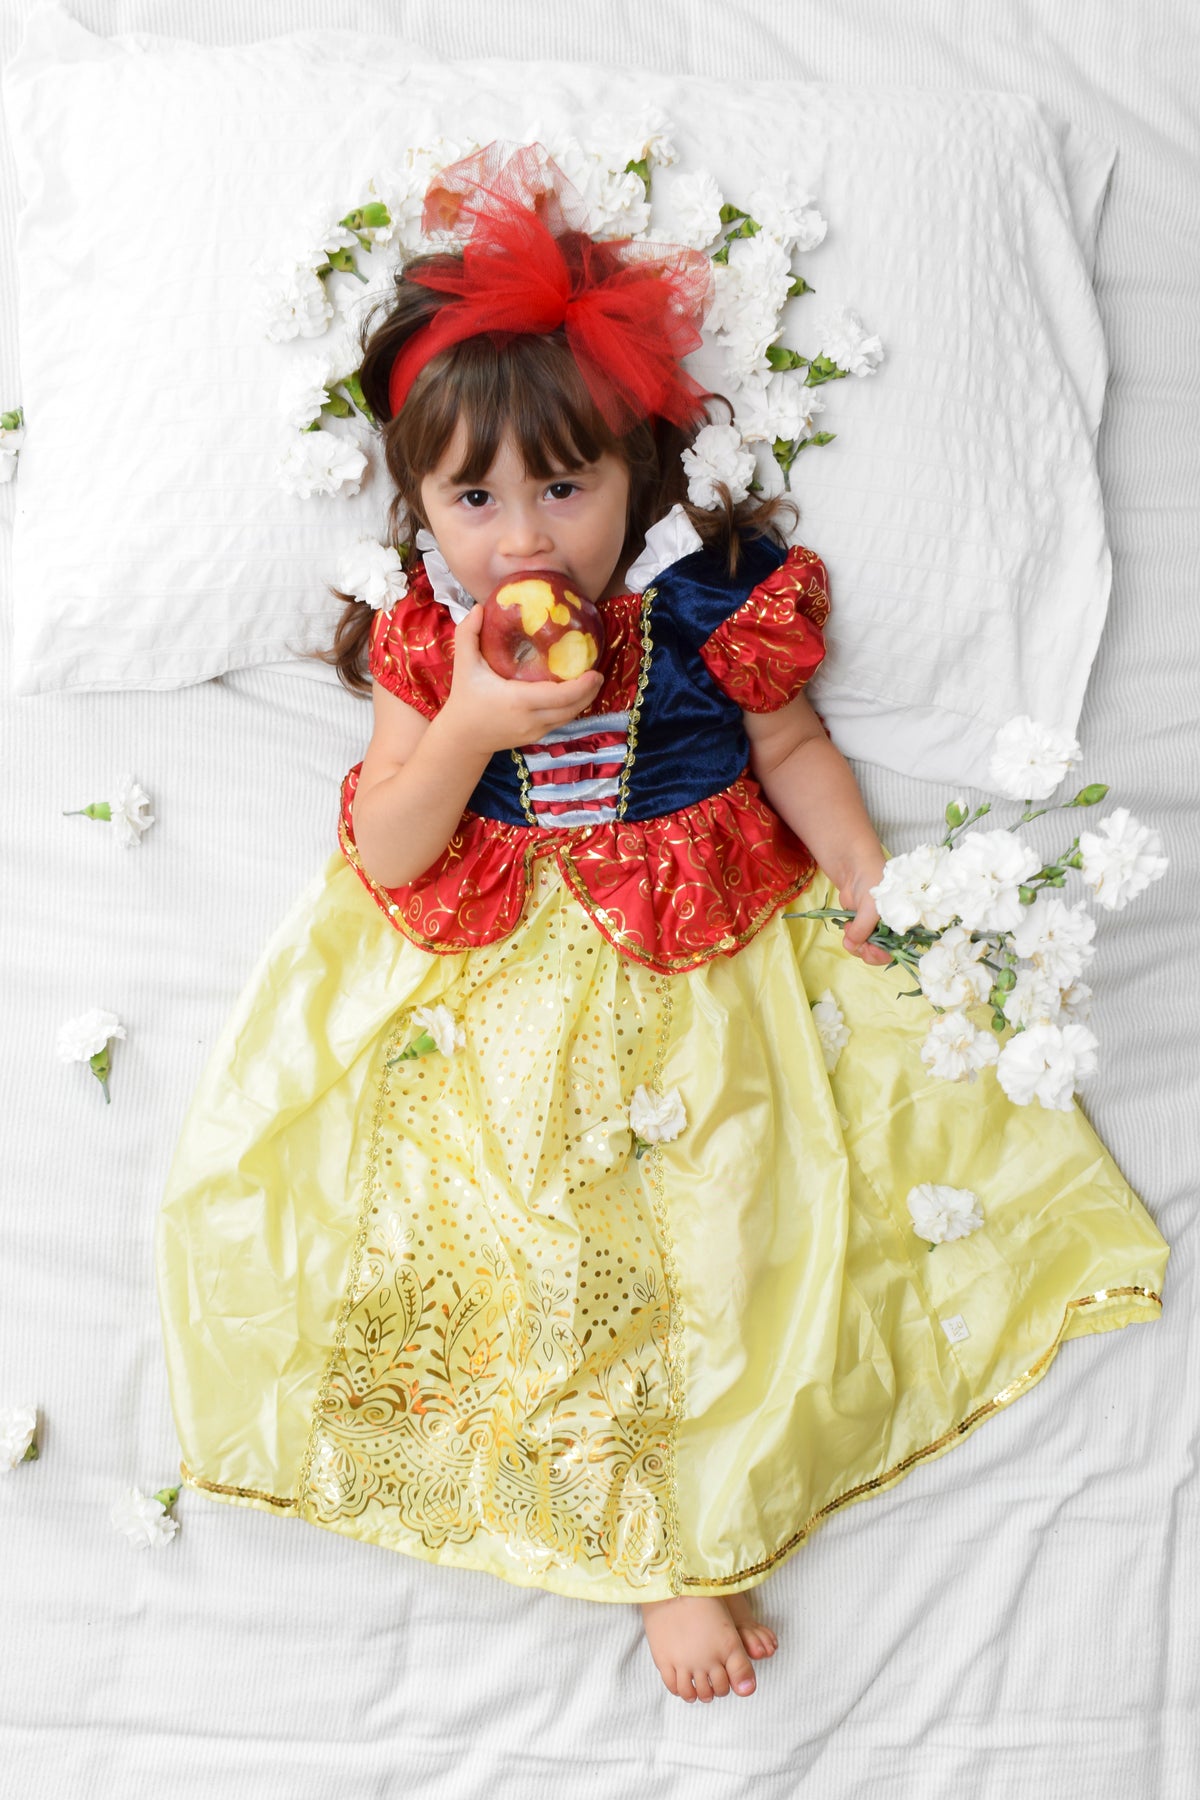 Snow White Dress Up Costume | Little Adventures